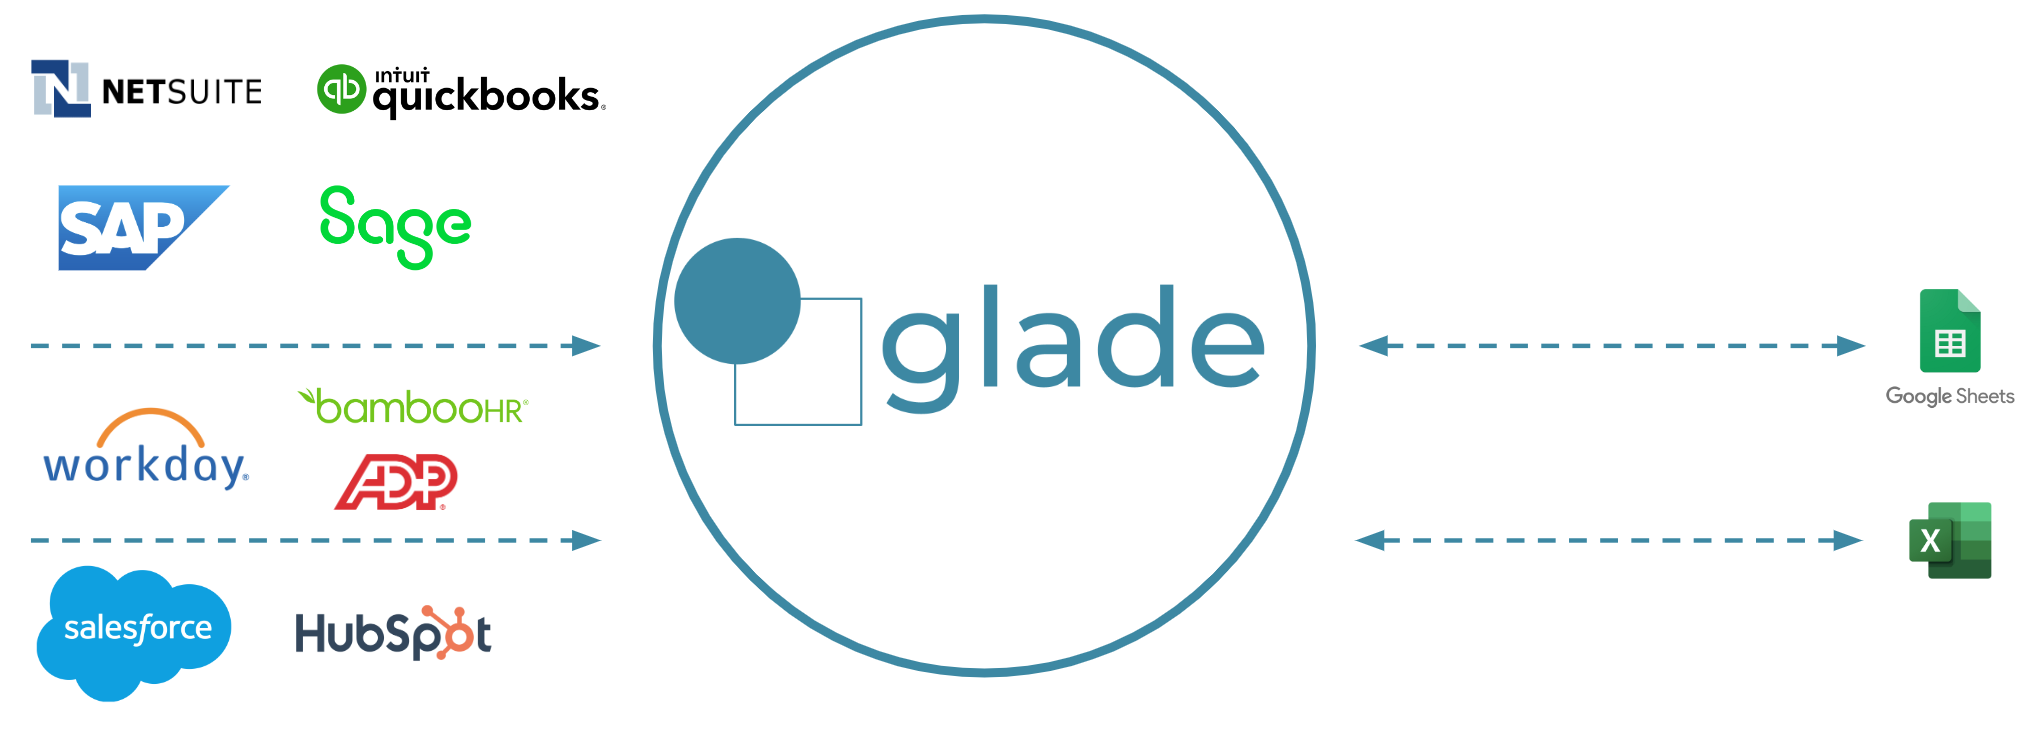 Glade - Next generation business planning software